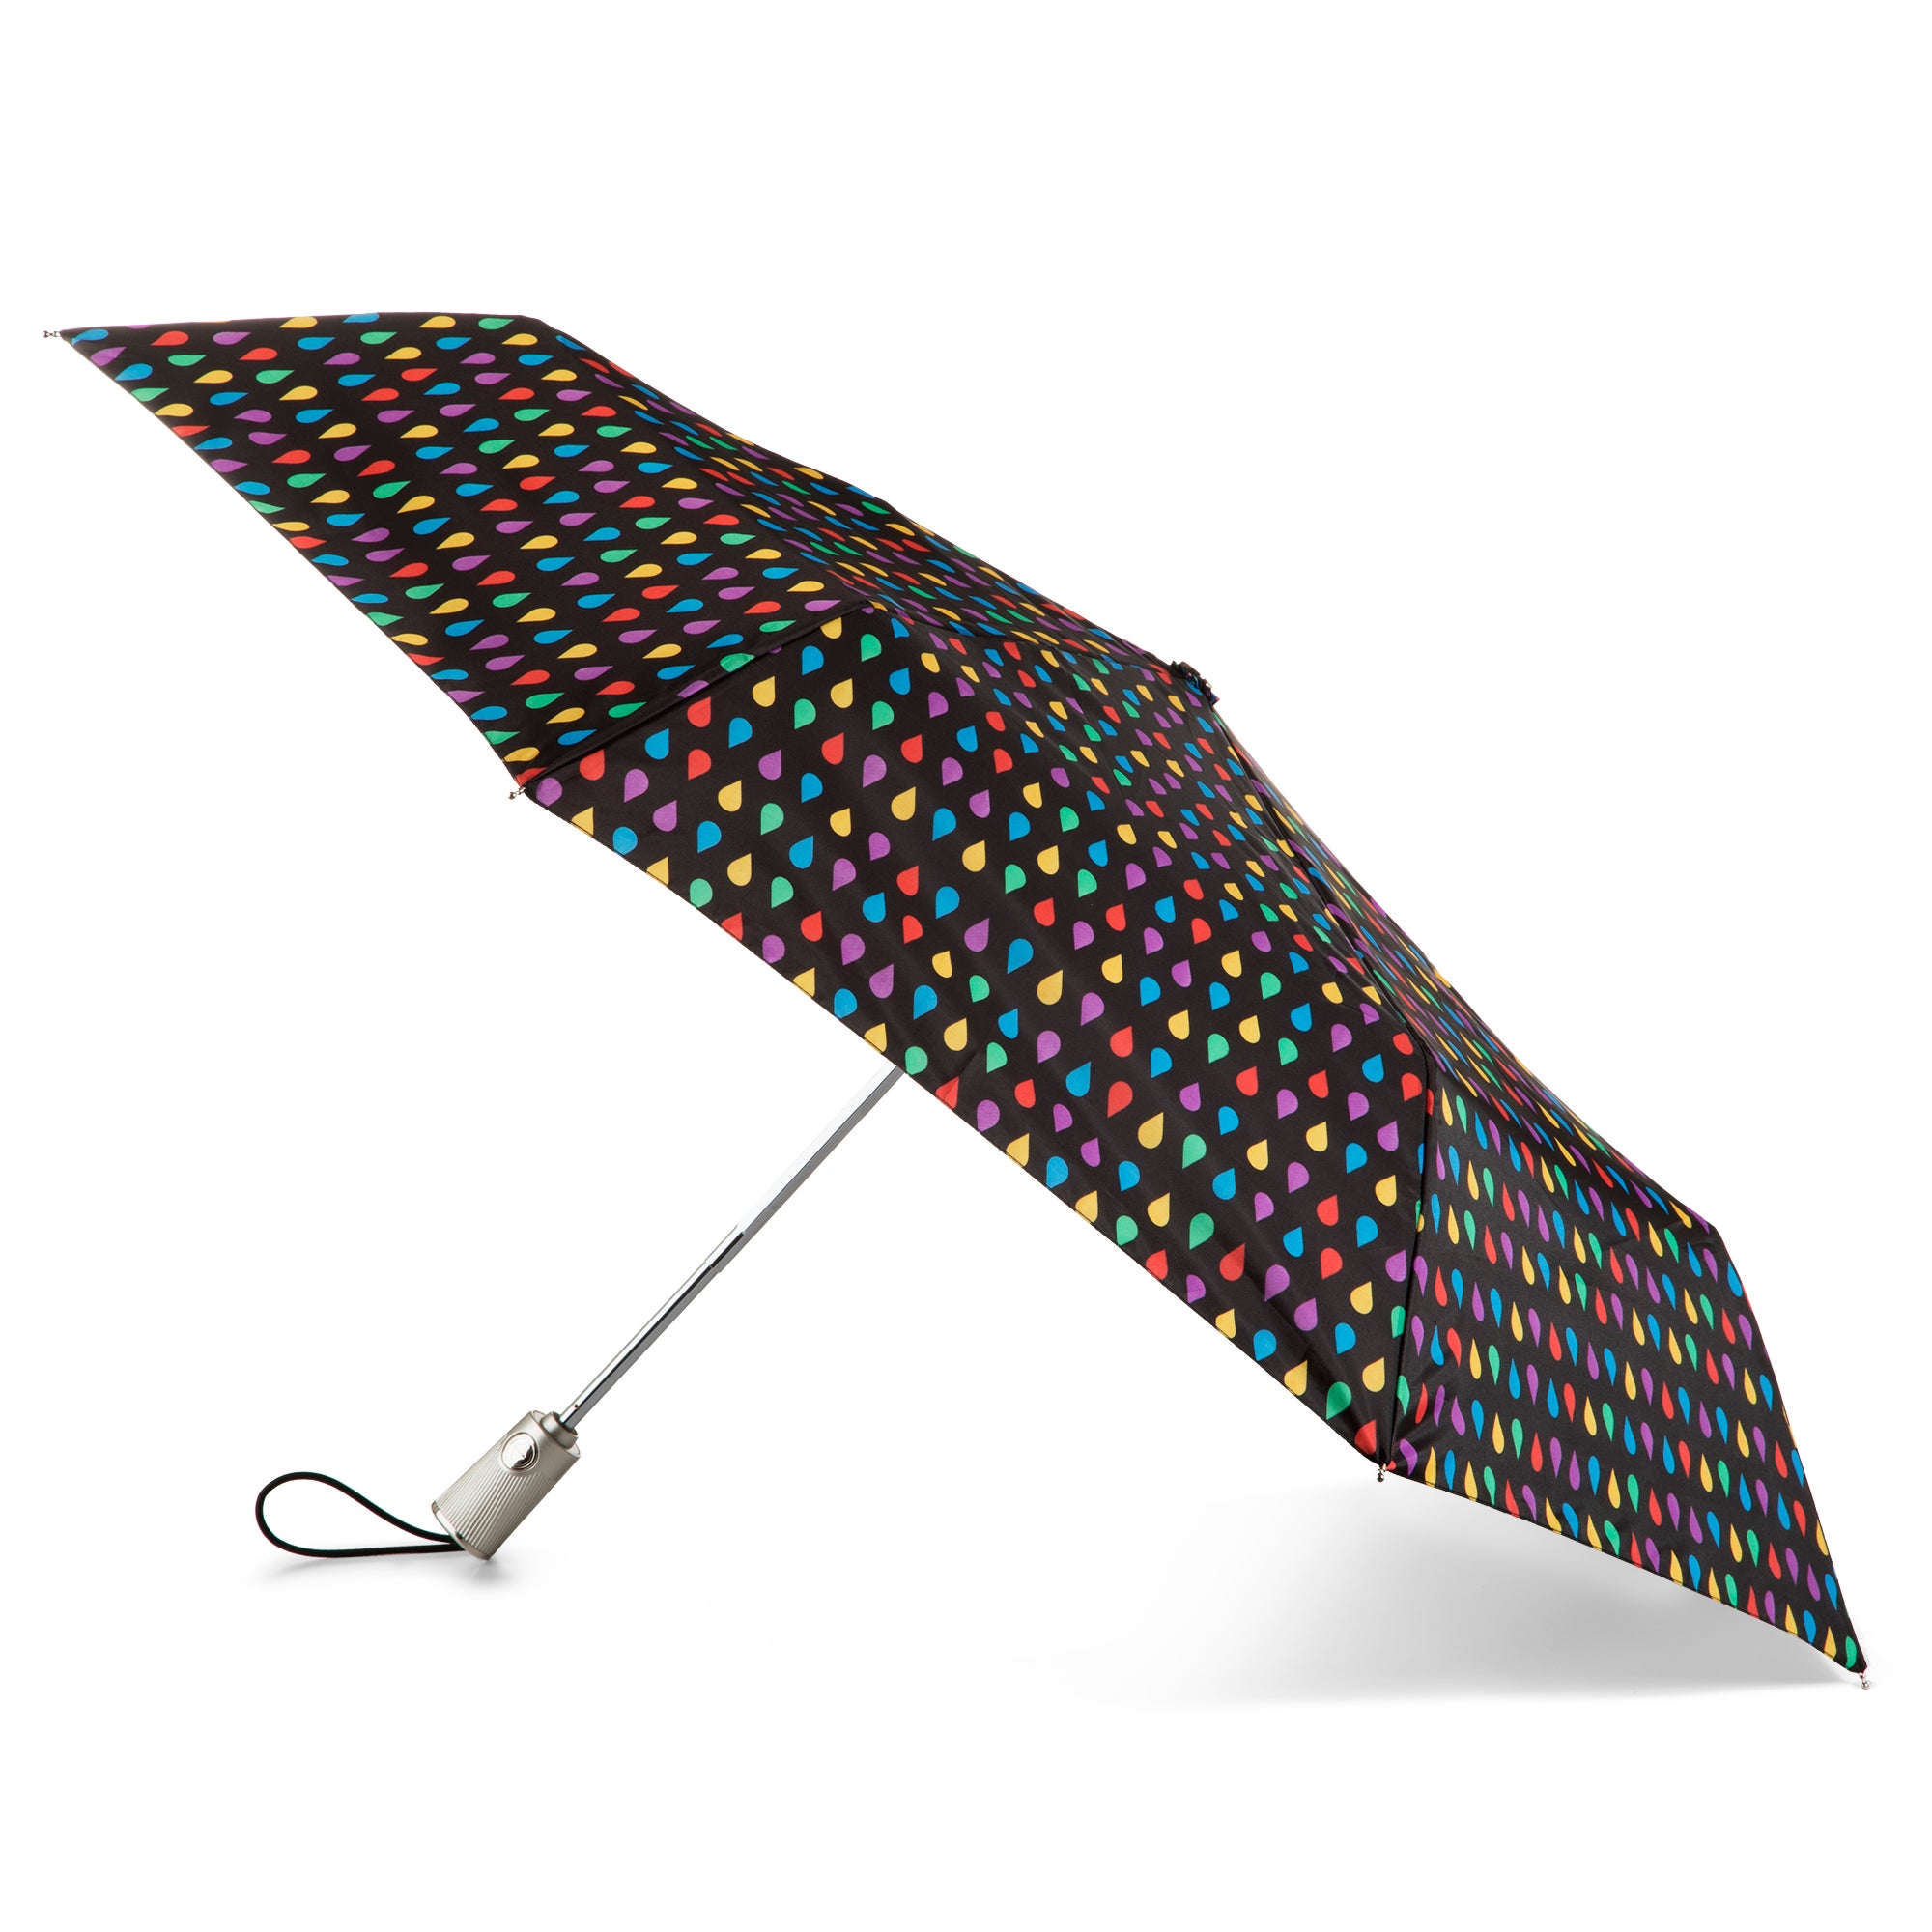 Large SunGuard® Umbrella with Auto Open/Close Technology